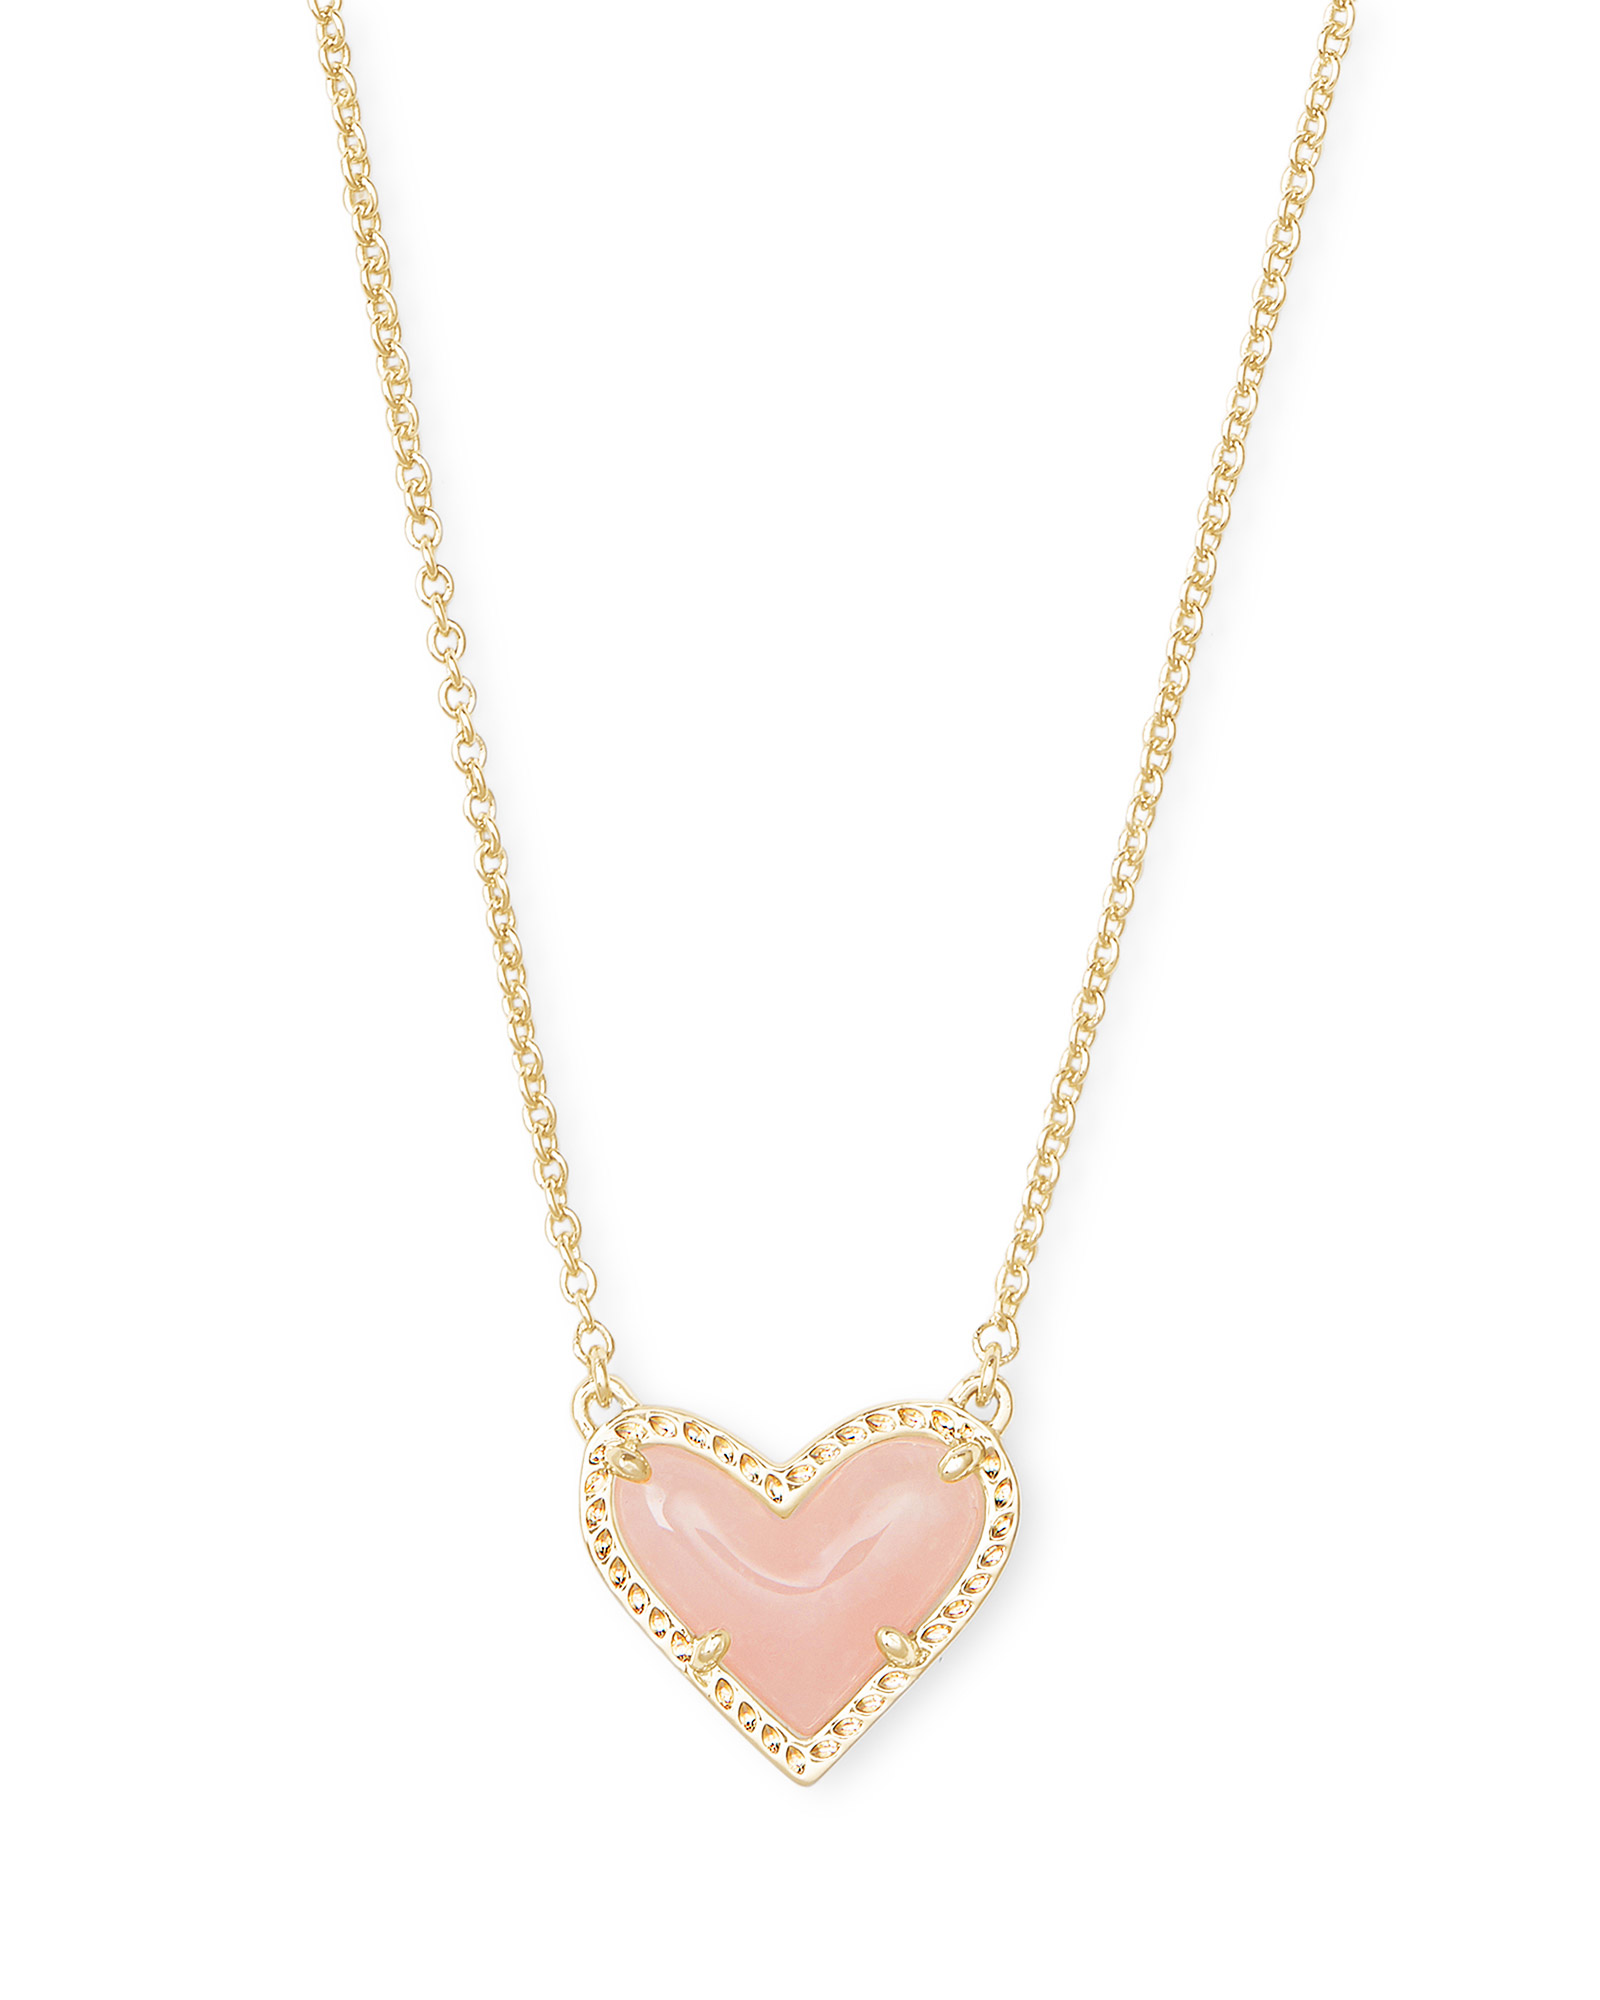 Ari Heart Rose Gold Drop Earrings in Pink Drusy